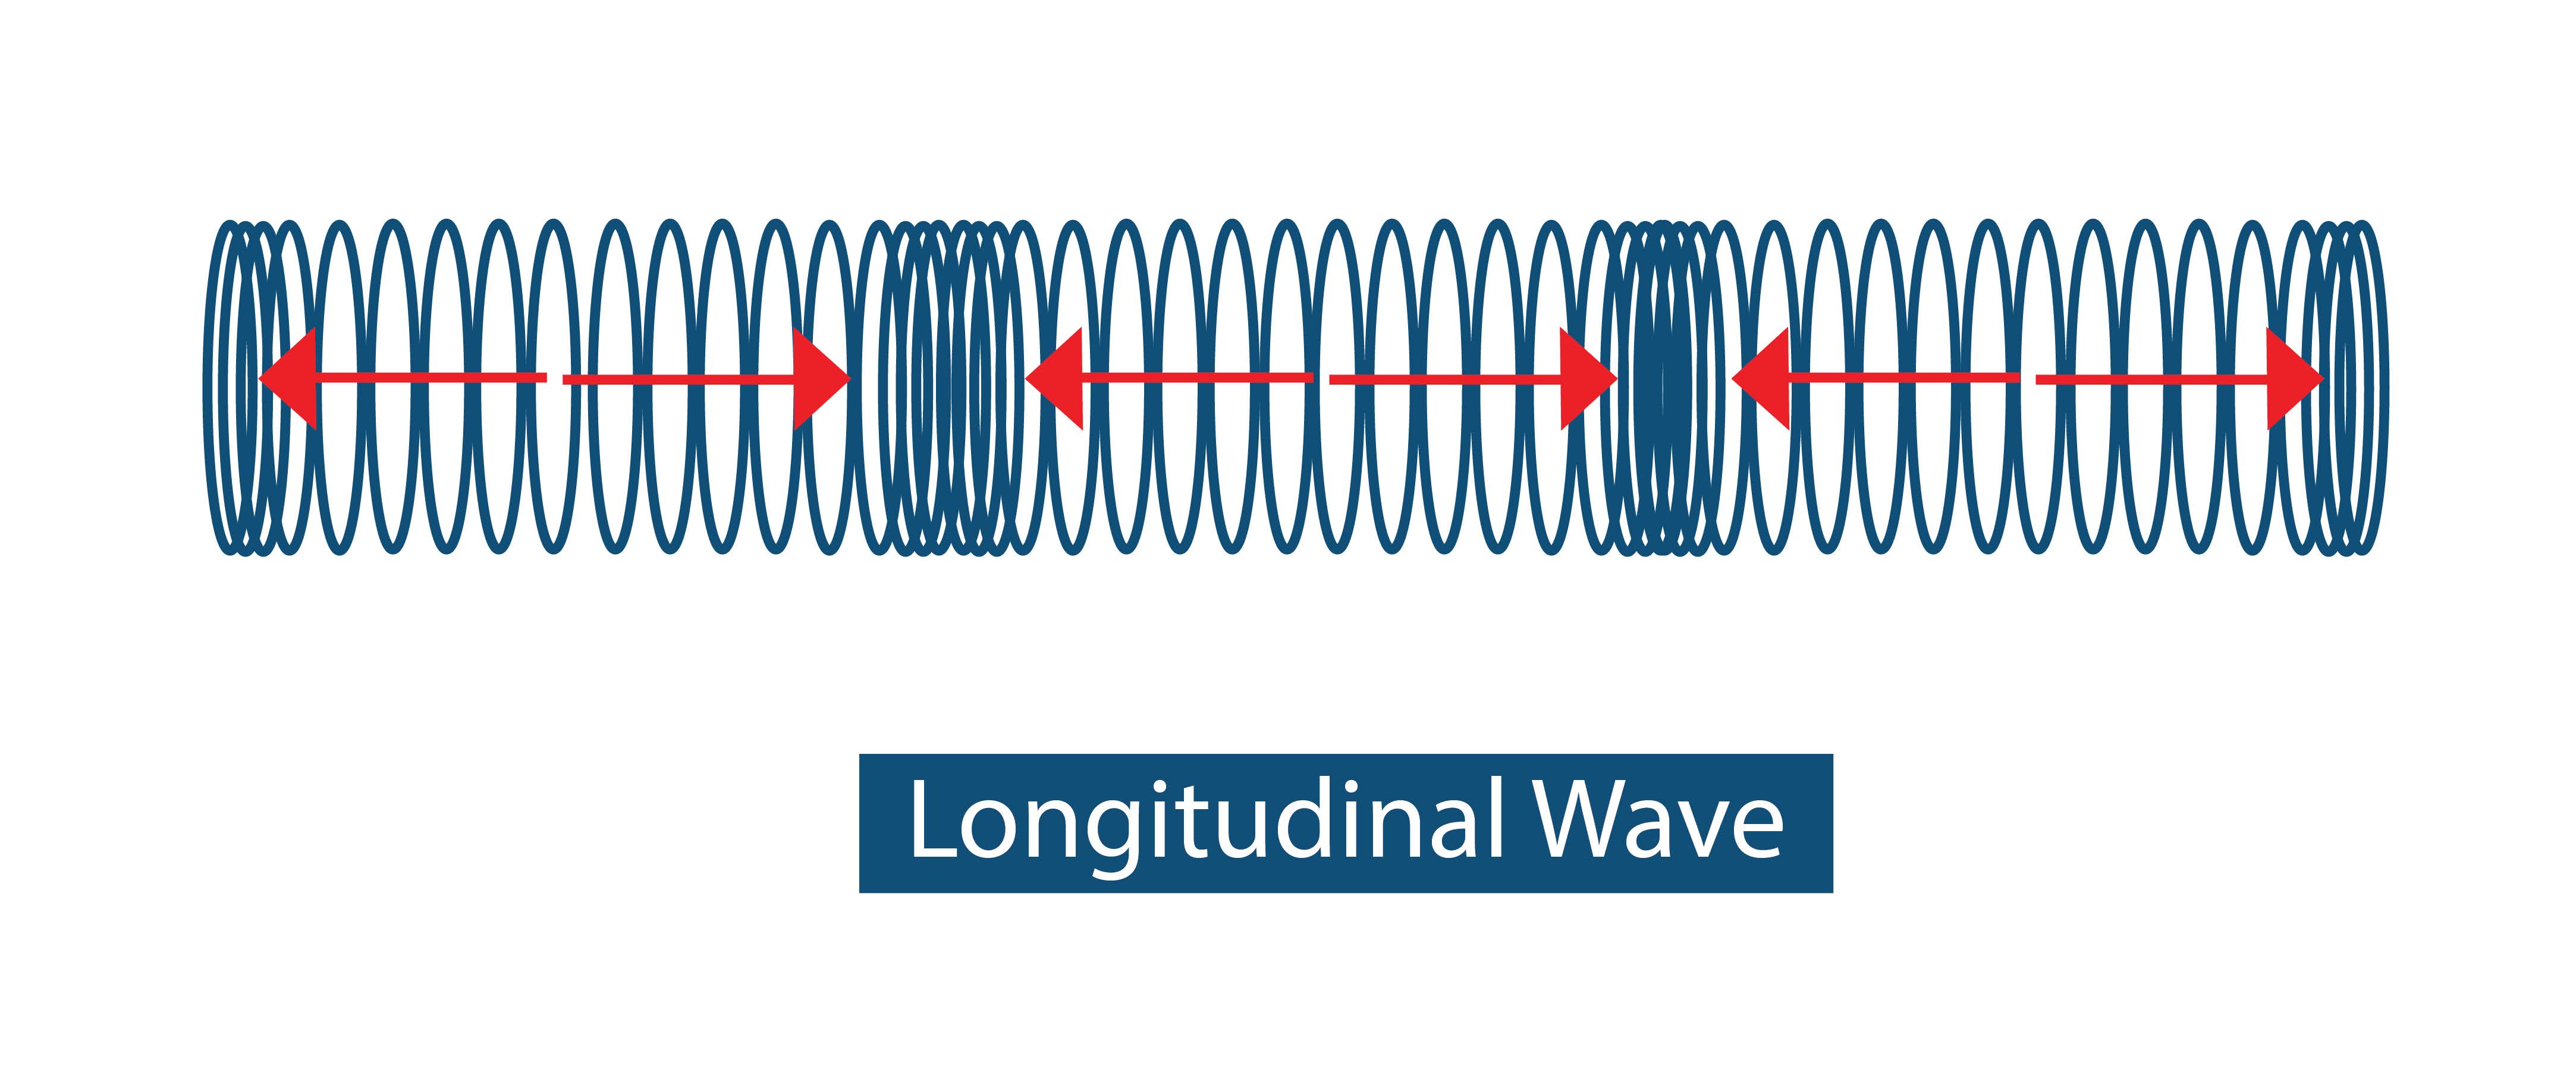 longitudinal waves